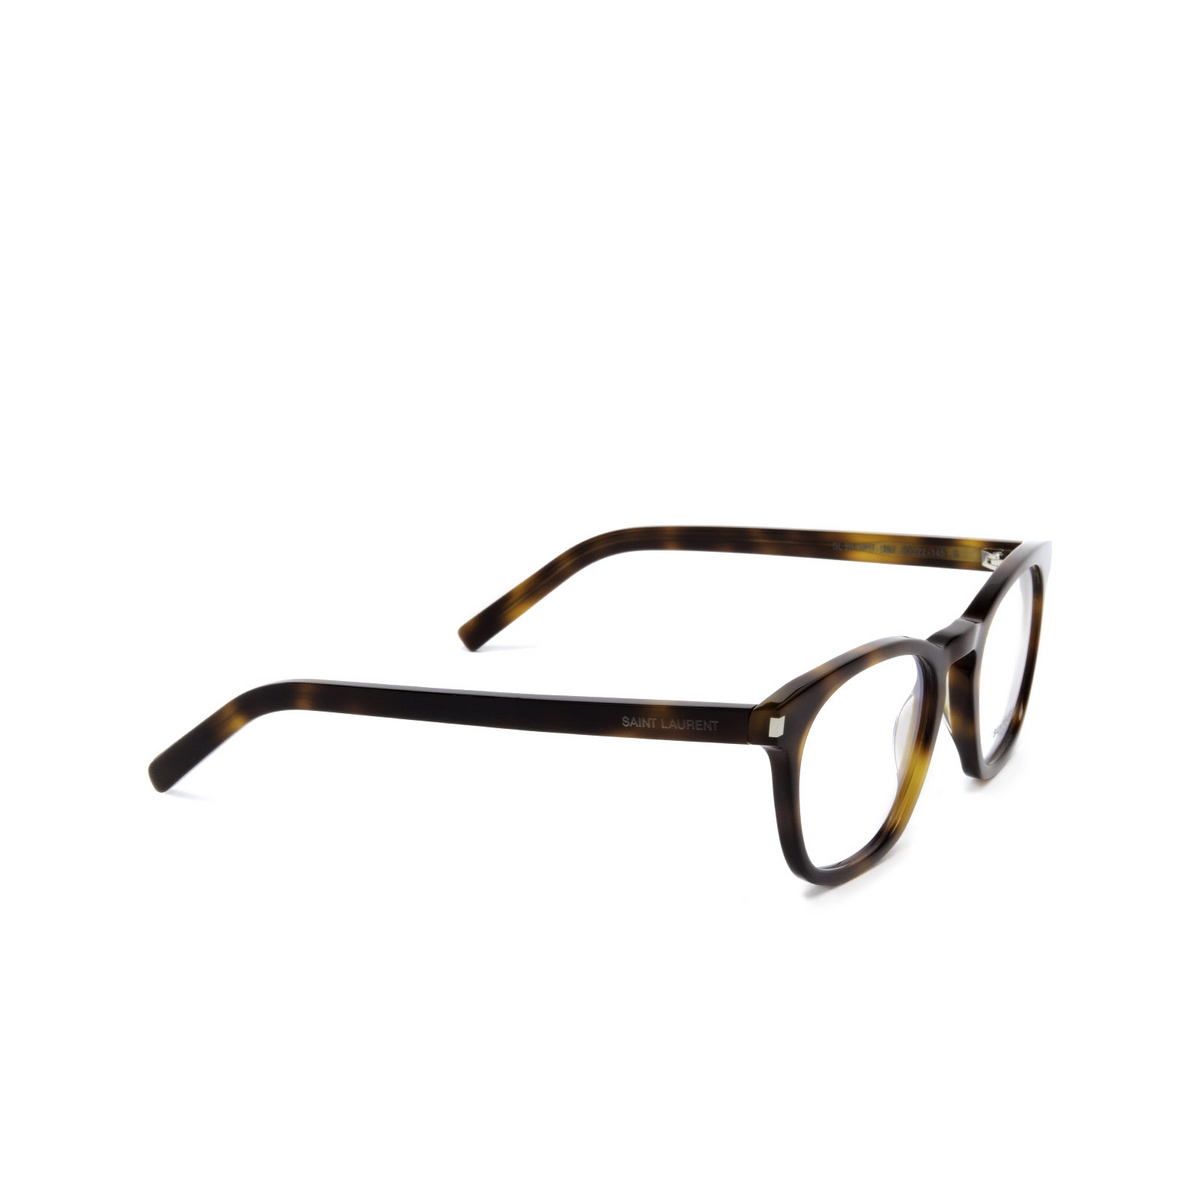 Saint Laurent® Square Eyeglasses: SL 28 OPT color 002 Havana - three-quarters view